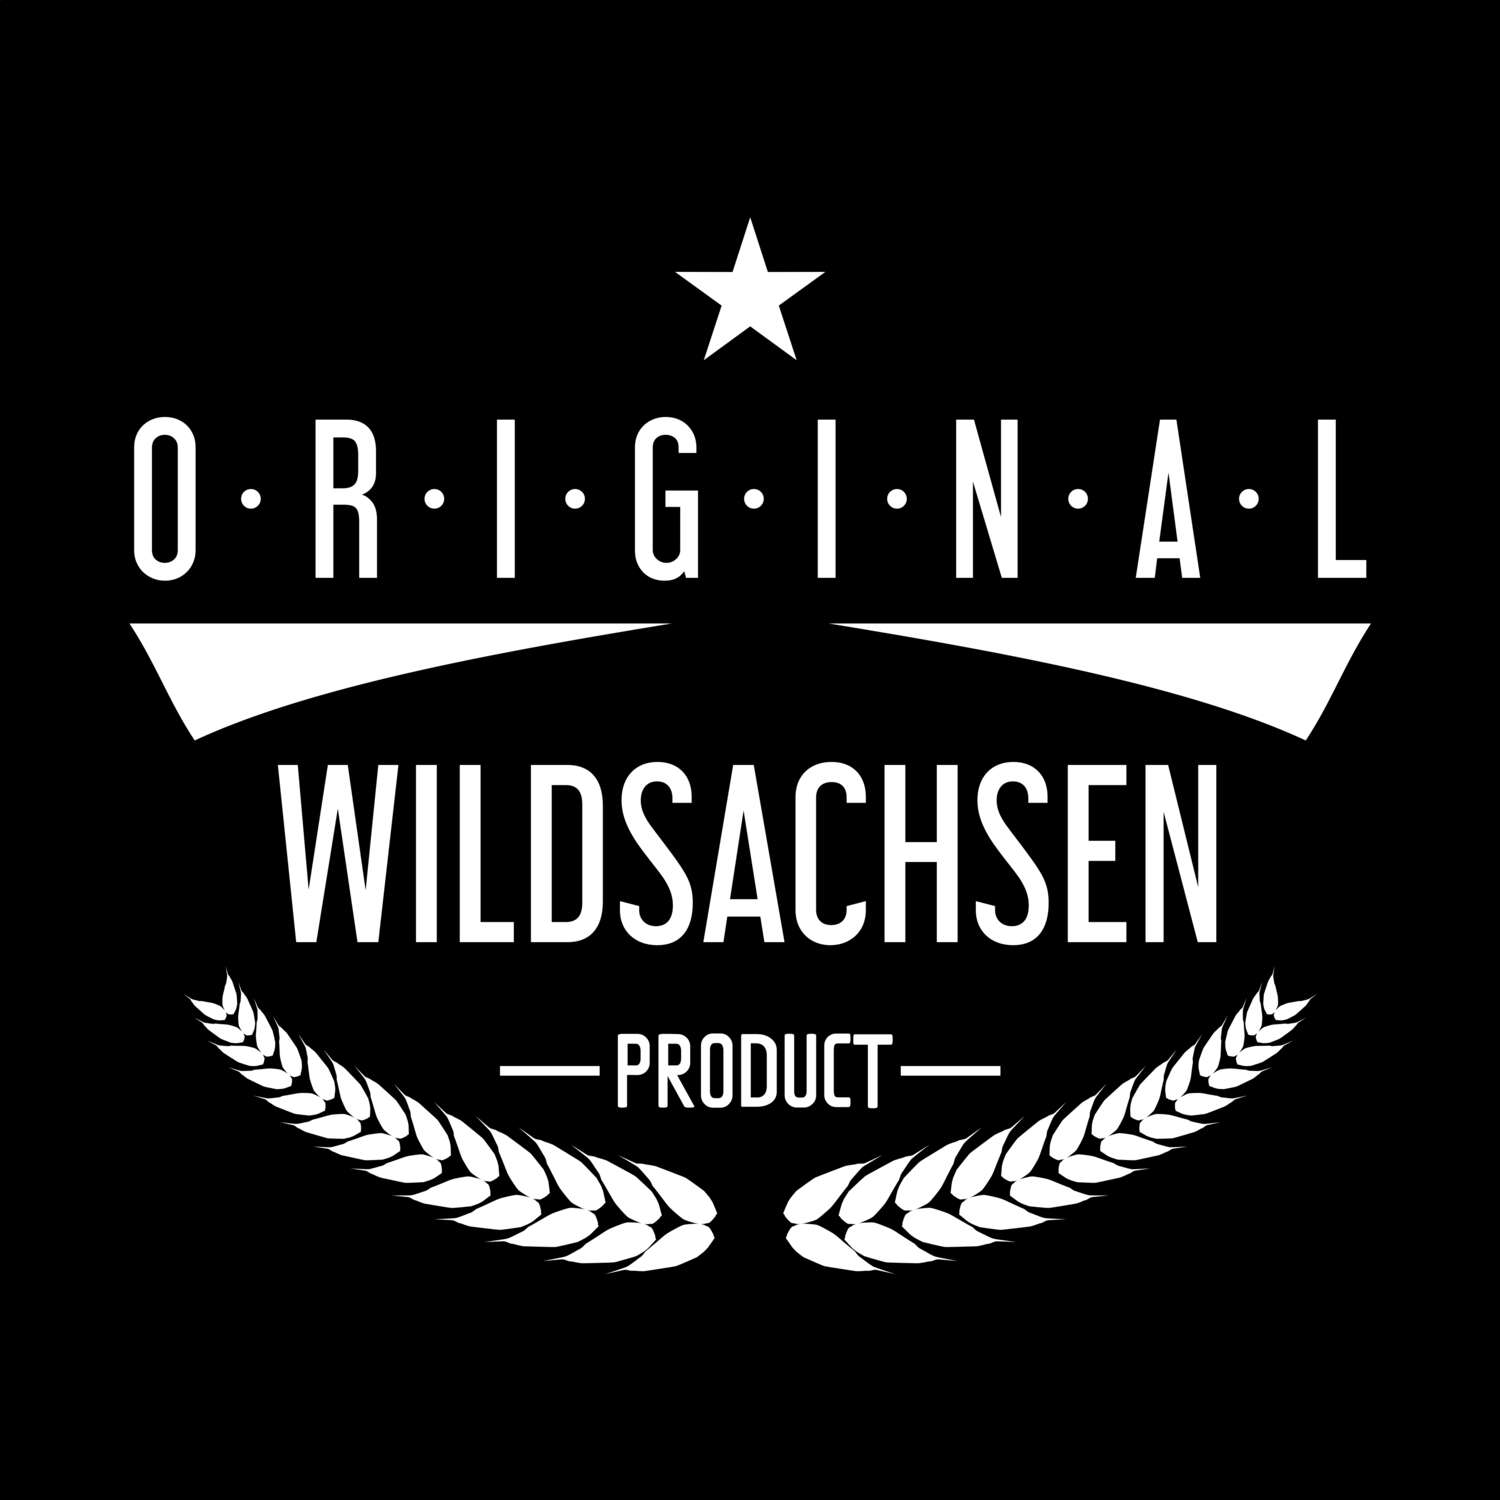 Wildsachsen T-Shirt »Original Product«